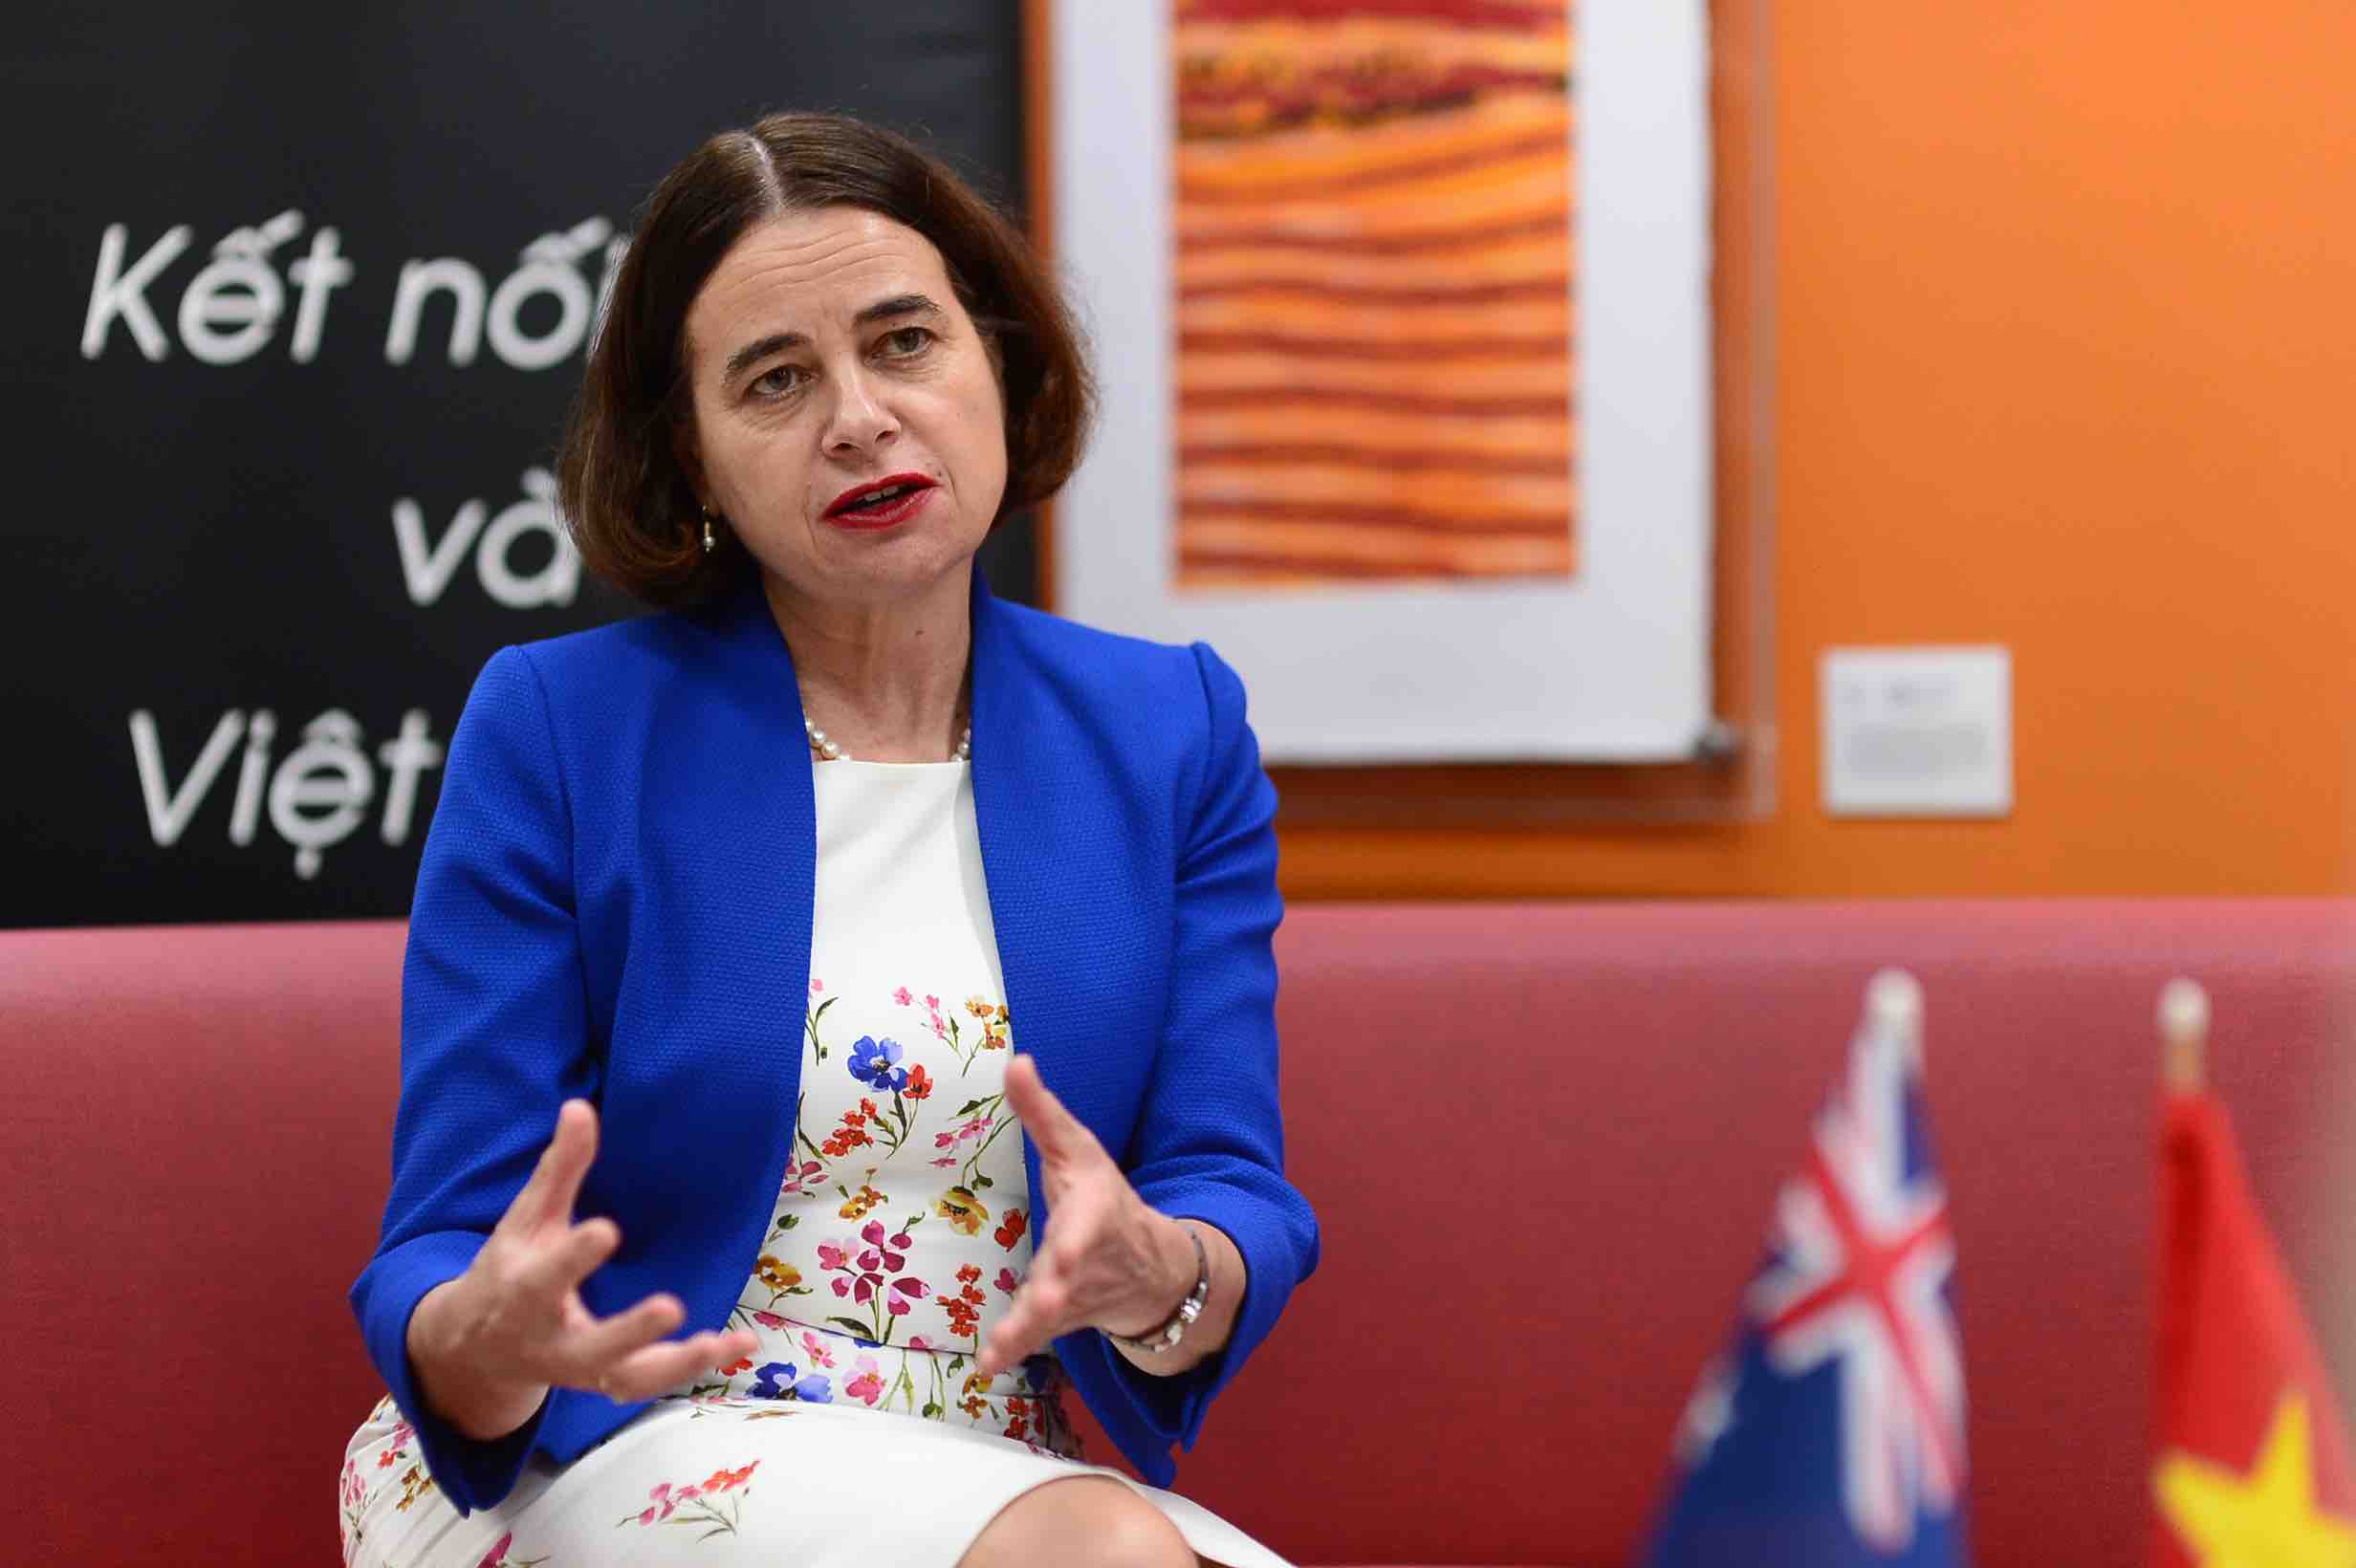 'We see Vietnam as an increasingly important regional strategic partner': Australian Ambassador Mudie